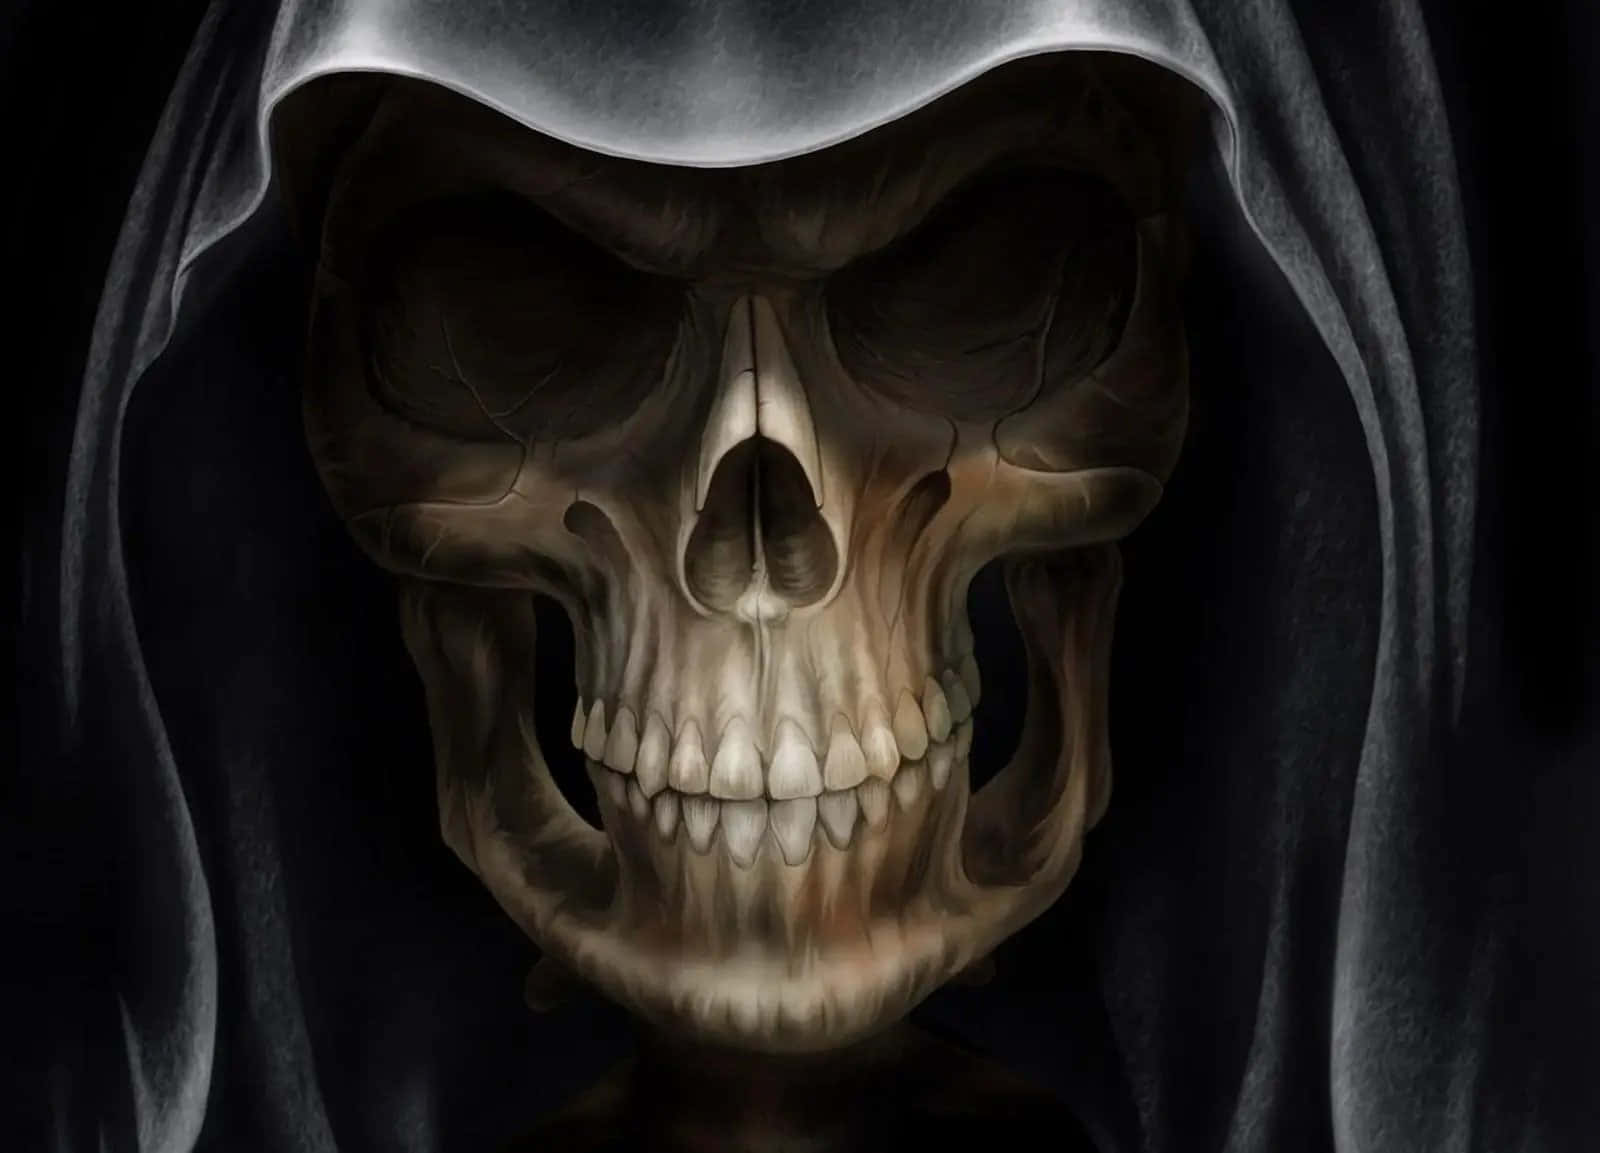 Cool Skull - A Spectacular Illustration